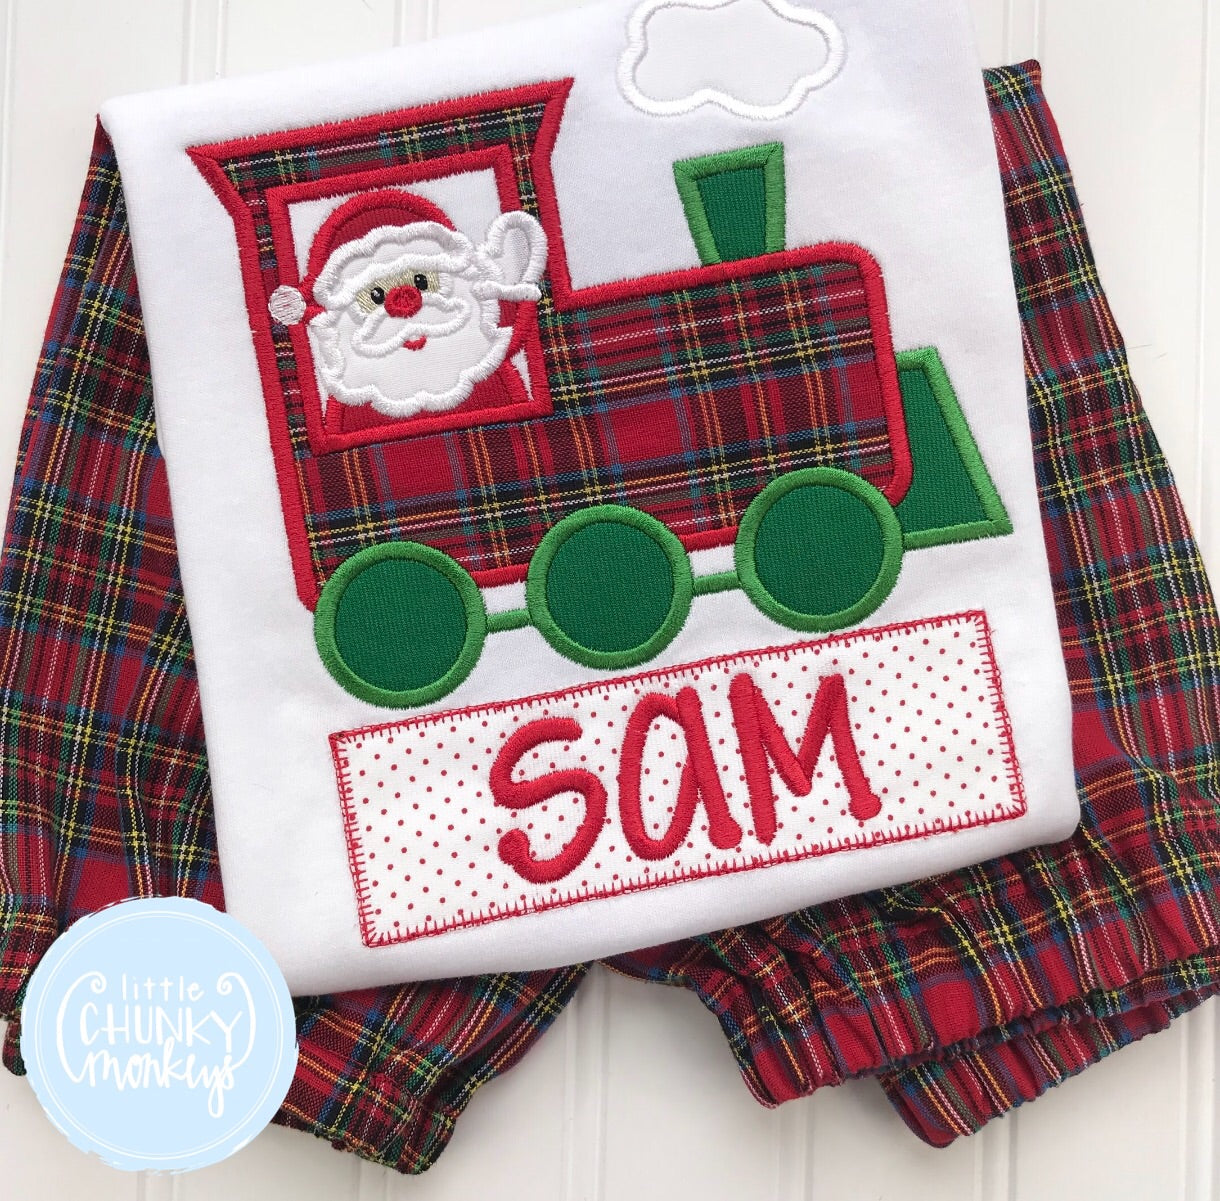 Boy Shirt - Applique Train with Santa + Personalization